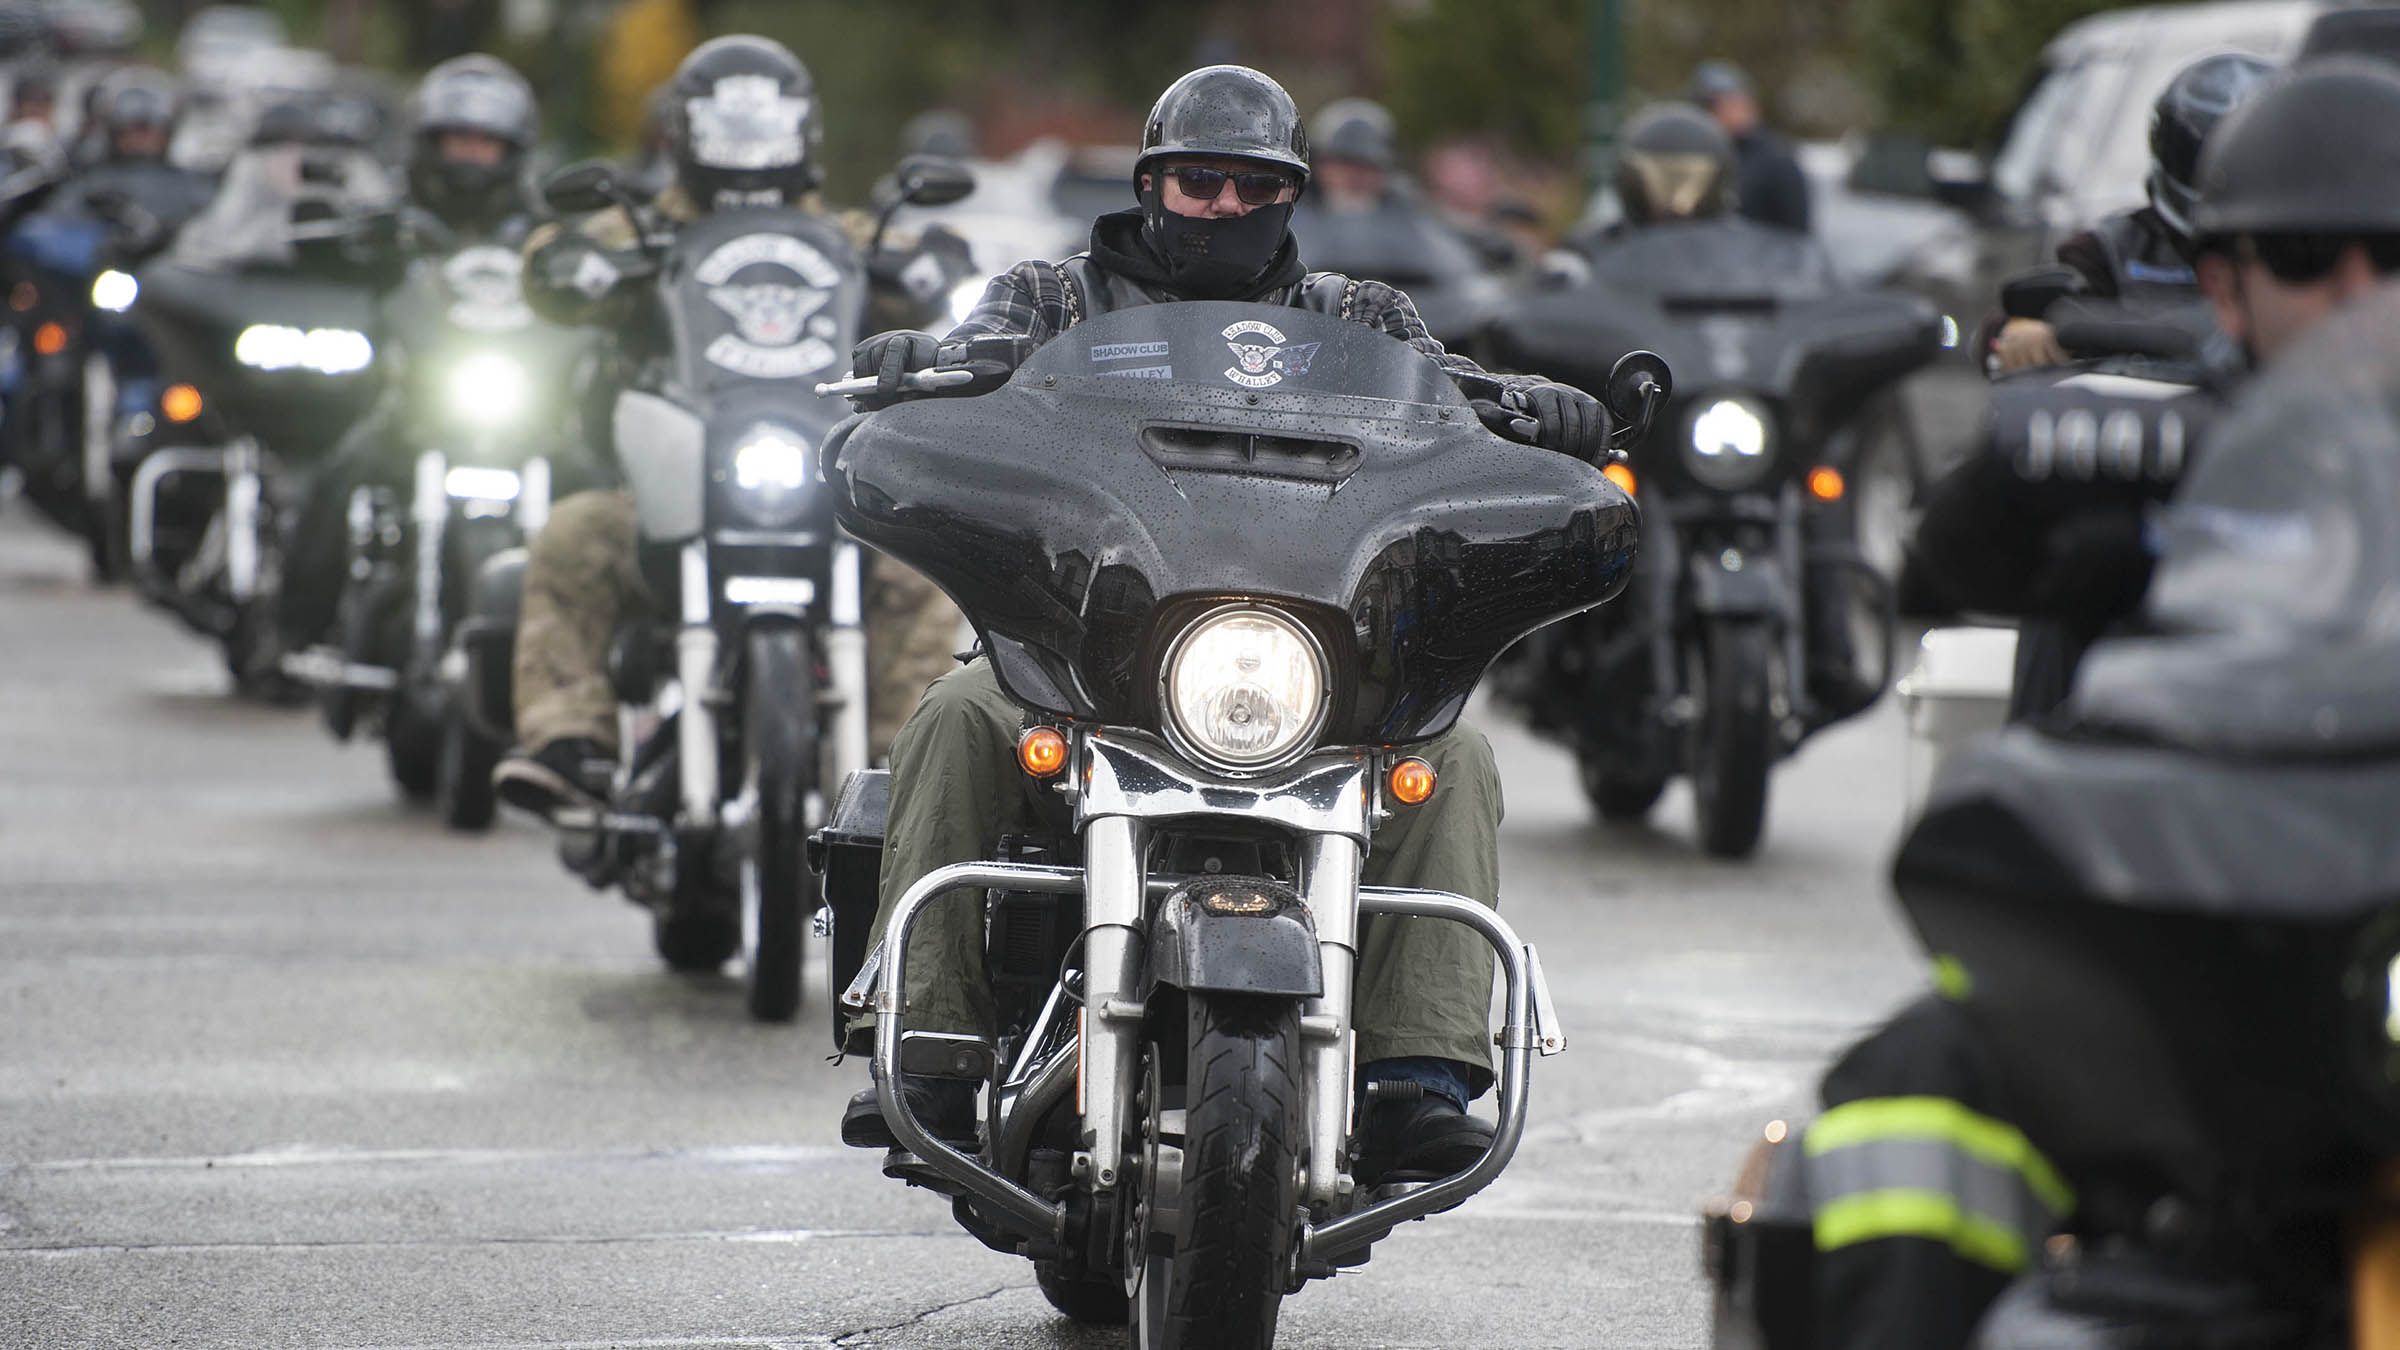 Feds name 7 motorcycle clubs as major criminal enterprises